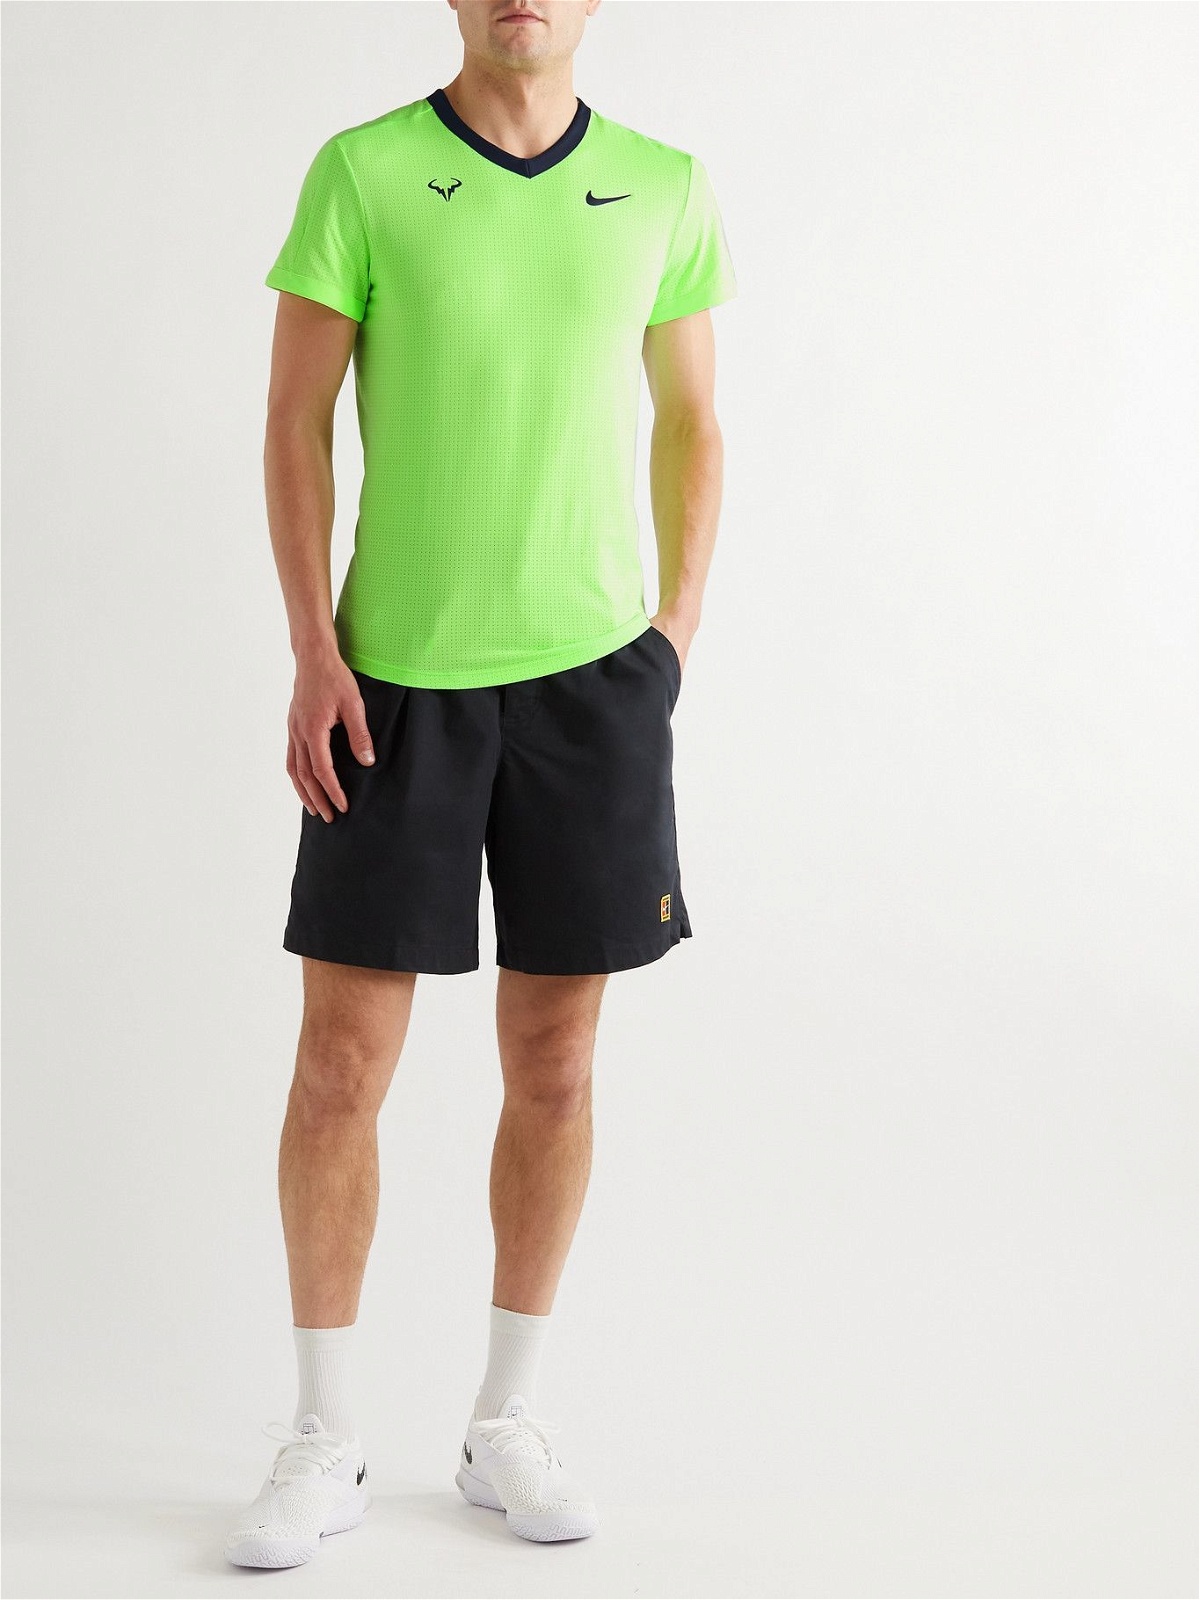 Nike Tennis - NikeCourt Dri-FIT ADV Rafa Tennis T-Shirt - Green Nike Tennis